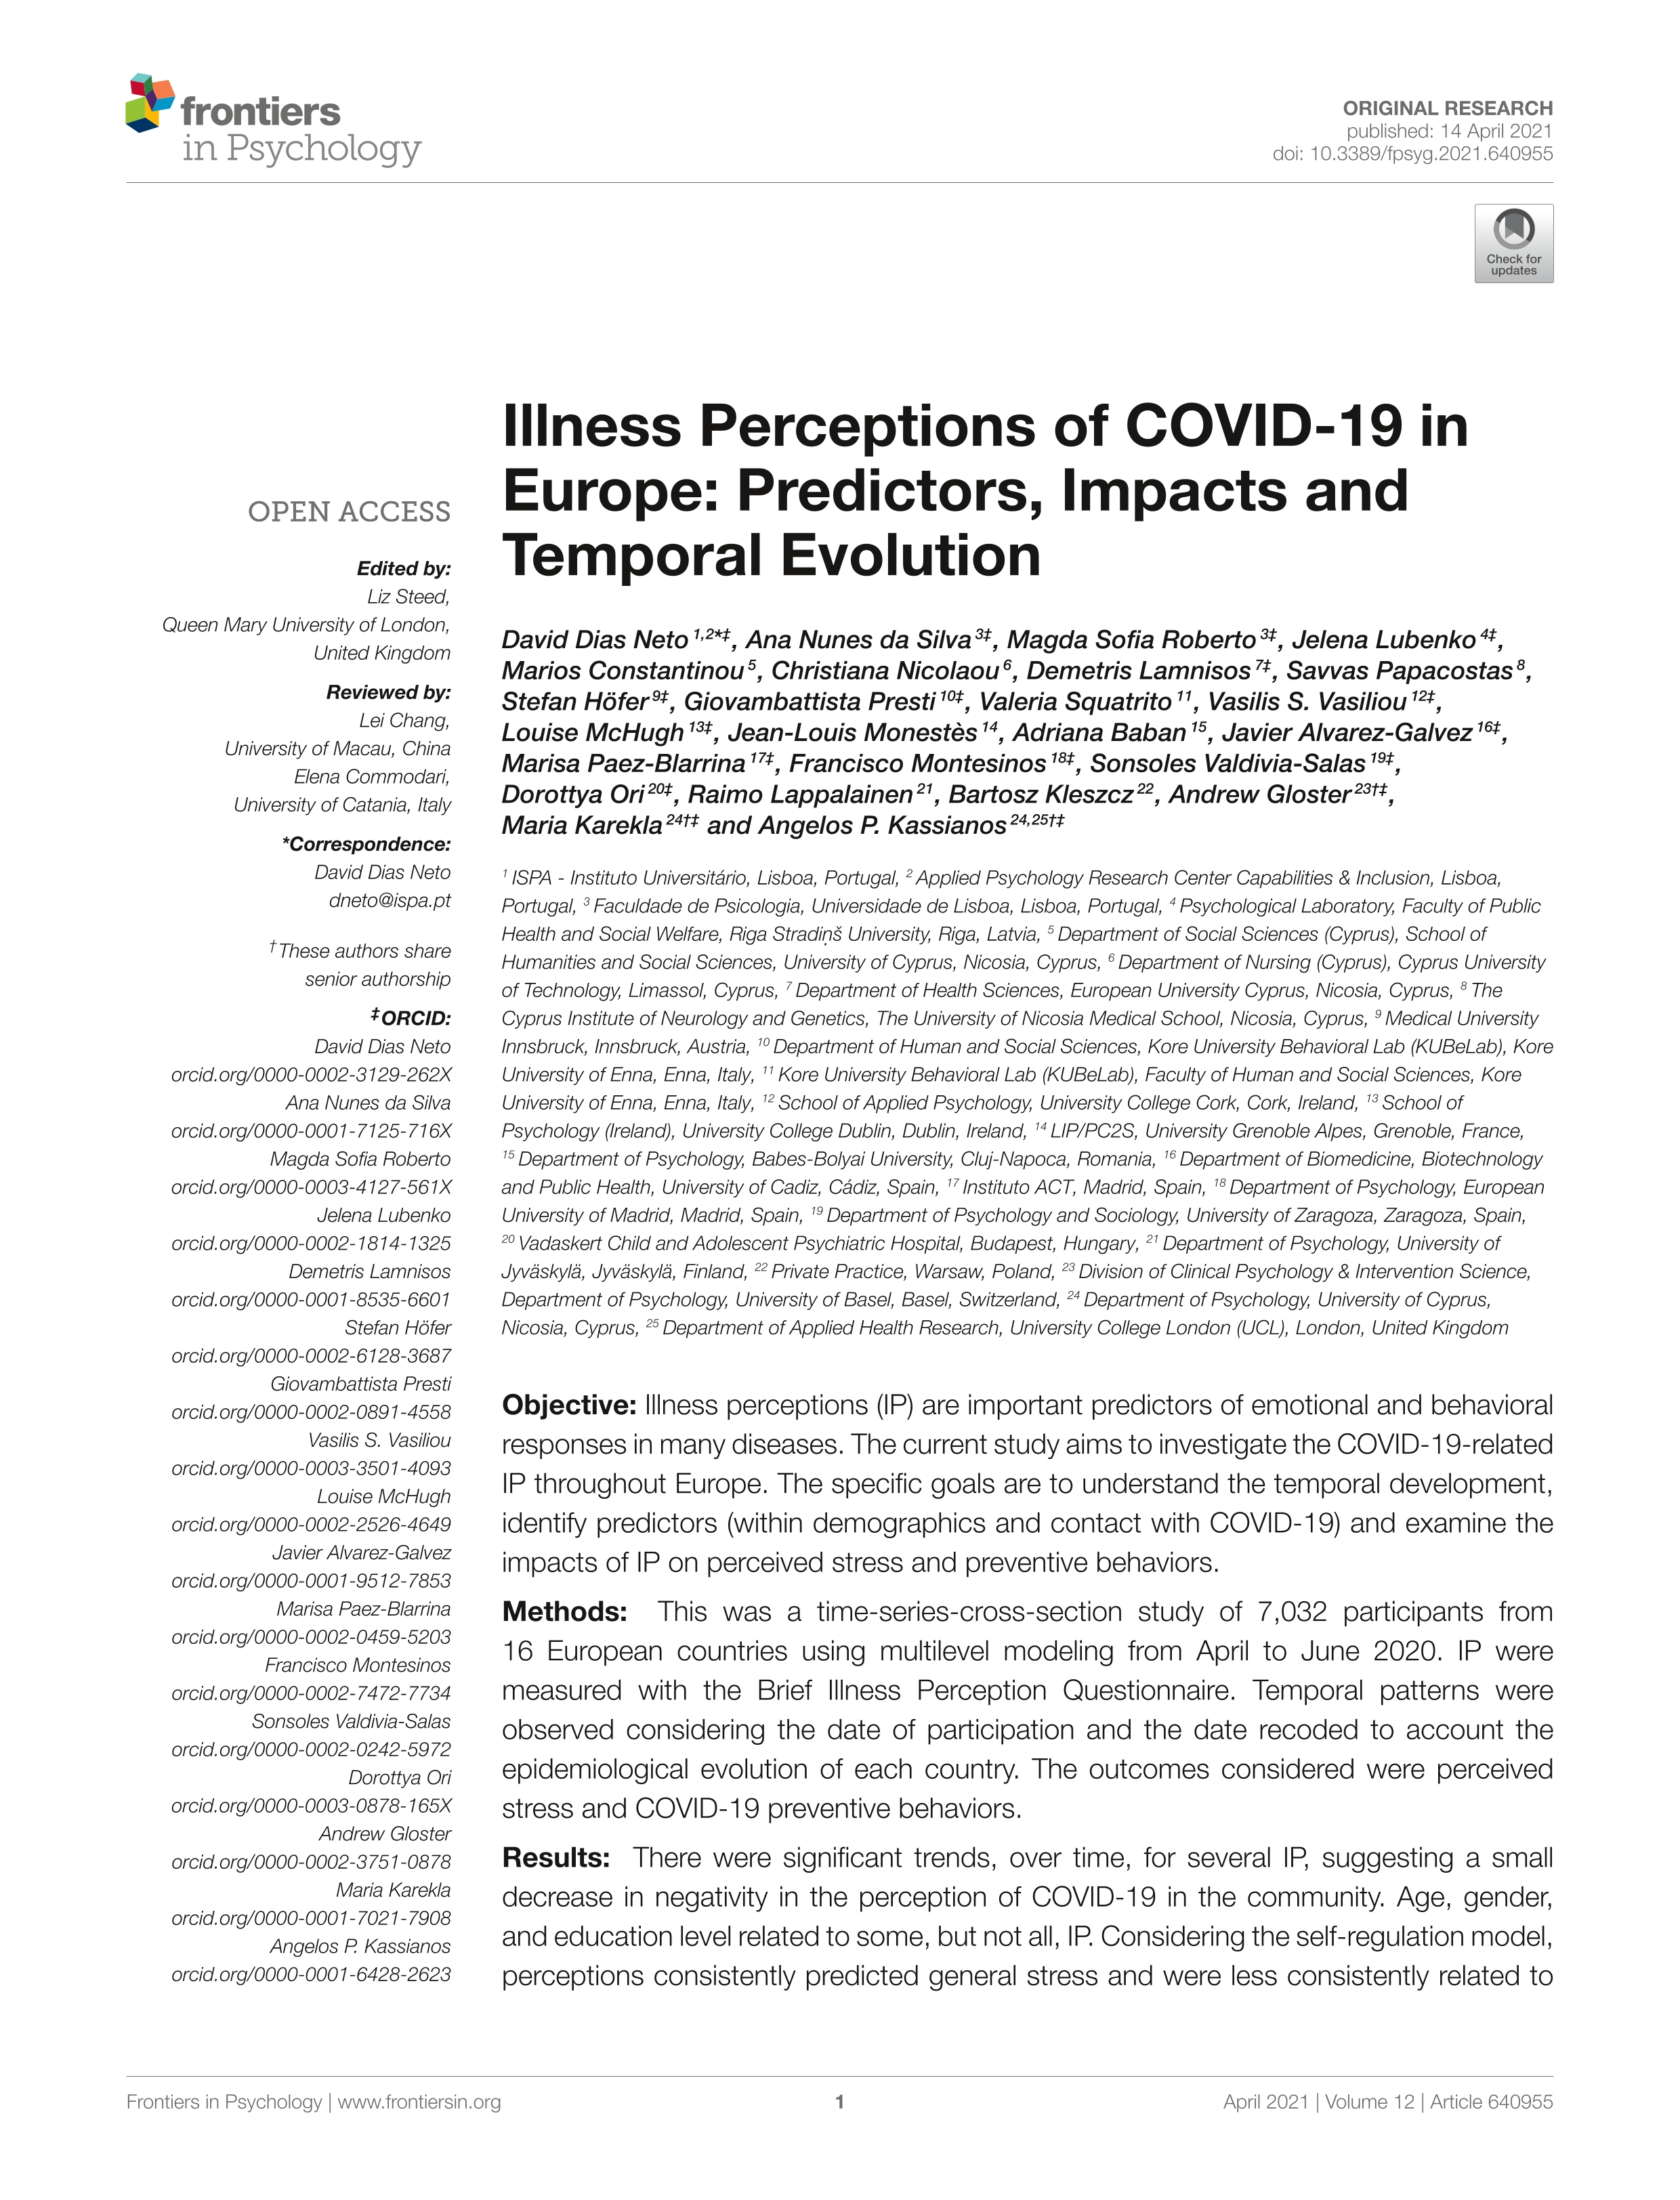 Illness perceptions of COVID-19 in Europe: Predictors, impacts and temporal evolution